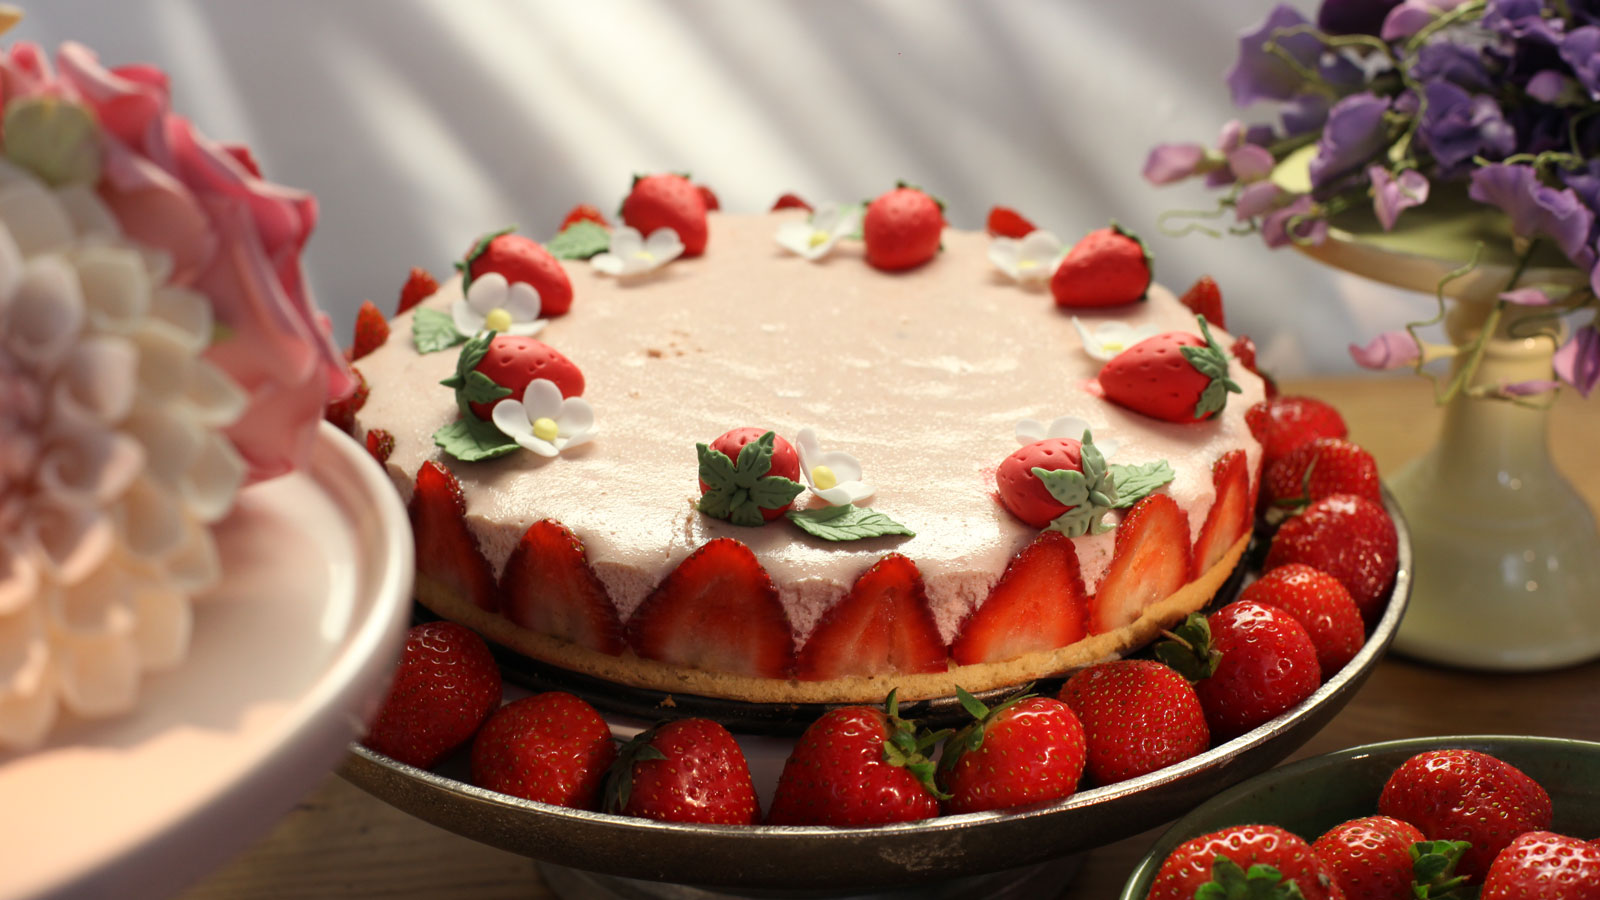 Pastel mousse de fresa (Strawberry mousse cake) - Paul Hollywood - Receta -  Canal Cocina